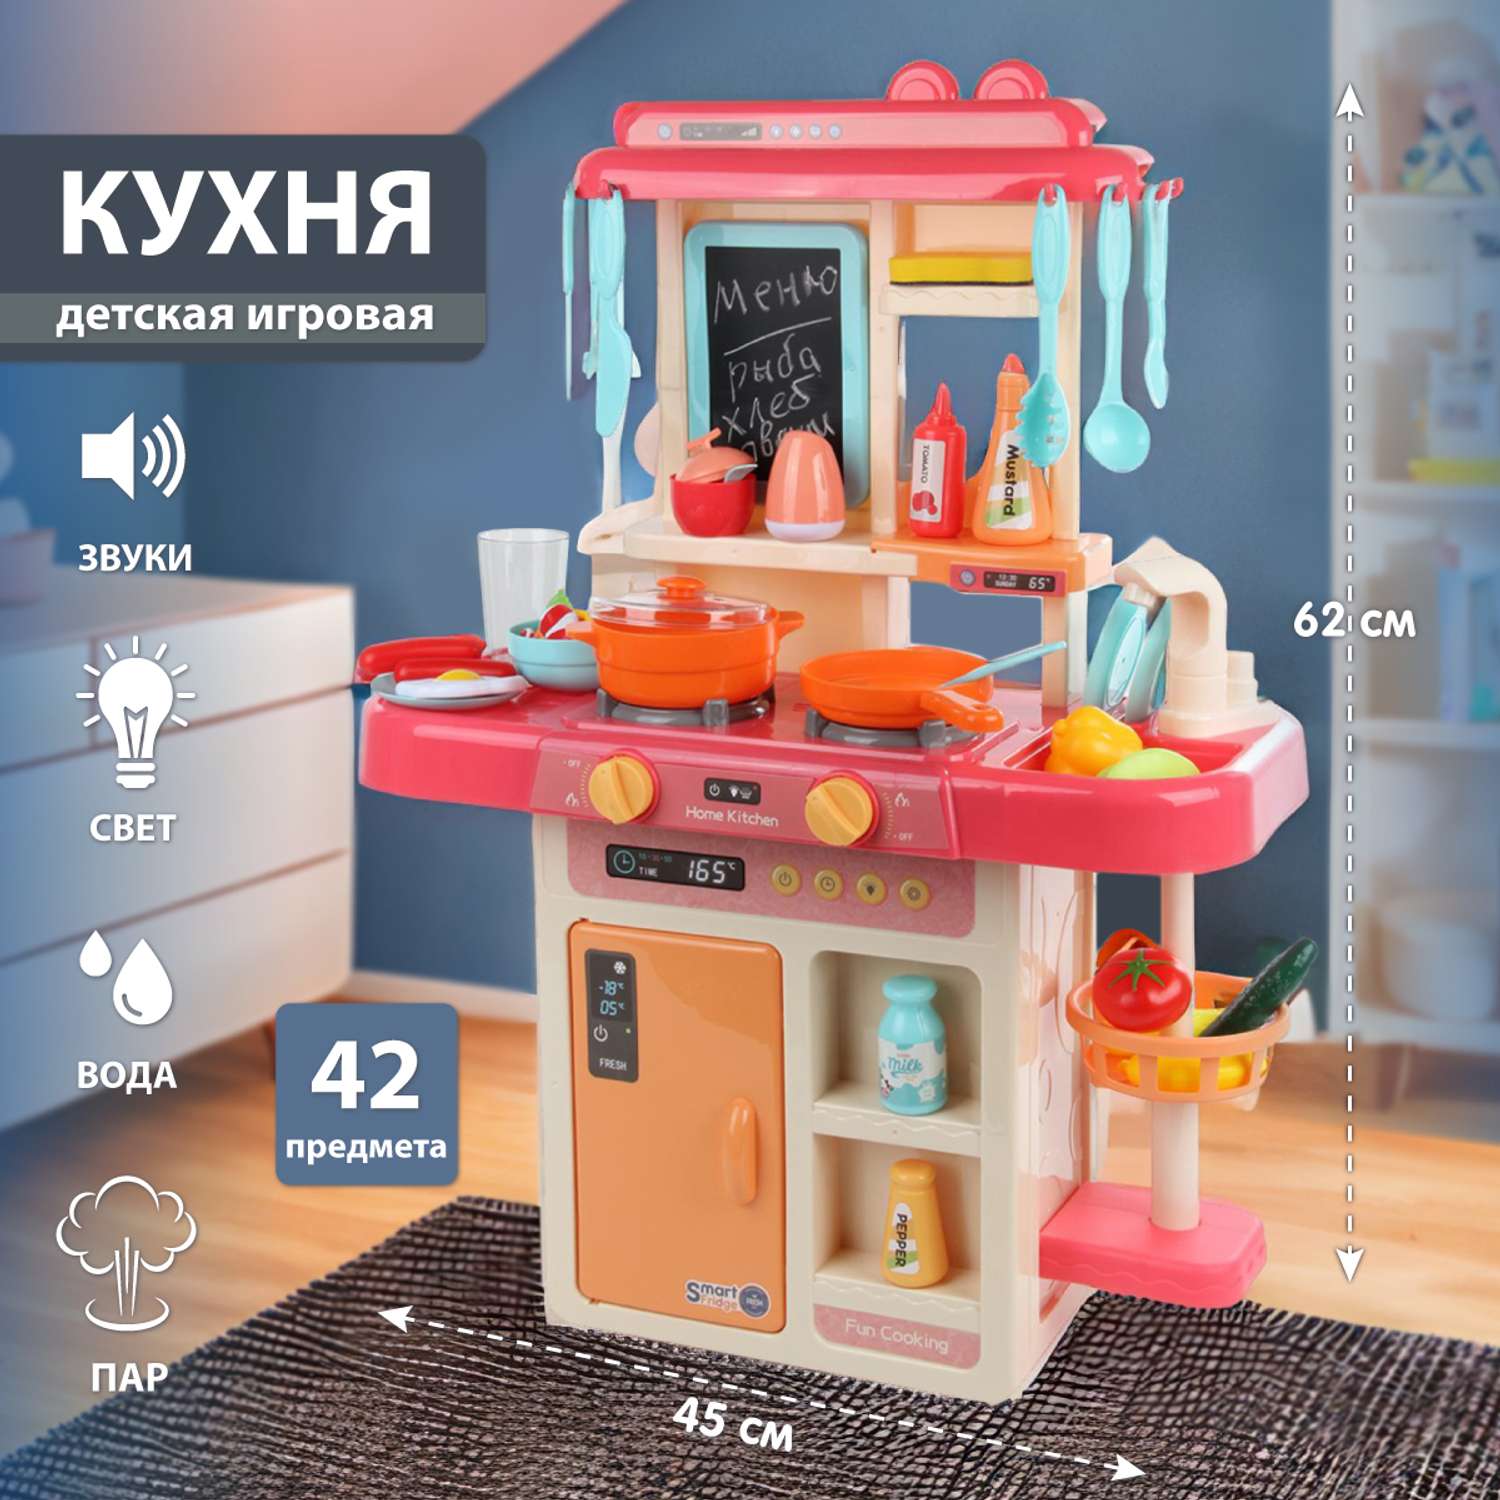 Детская кухня Veld Co плита холодильник раковина свет звук пар вода - фото 1